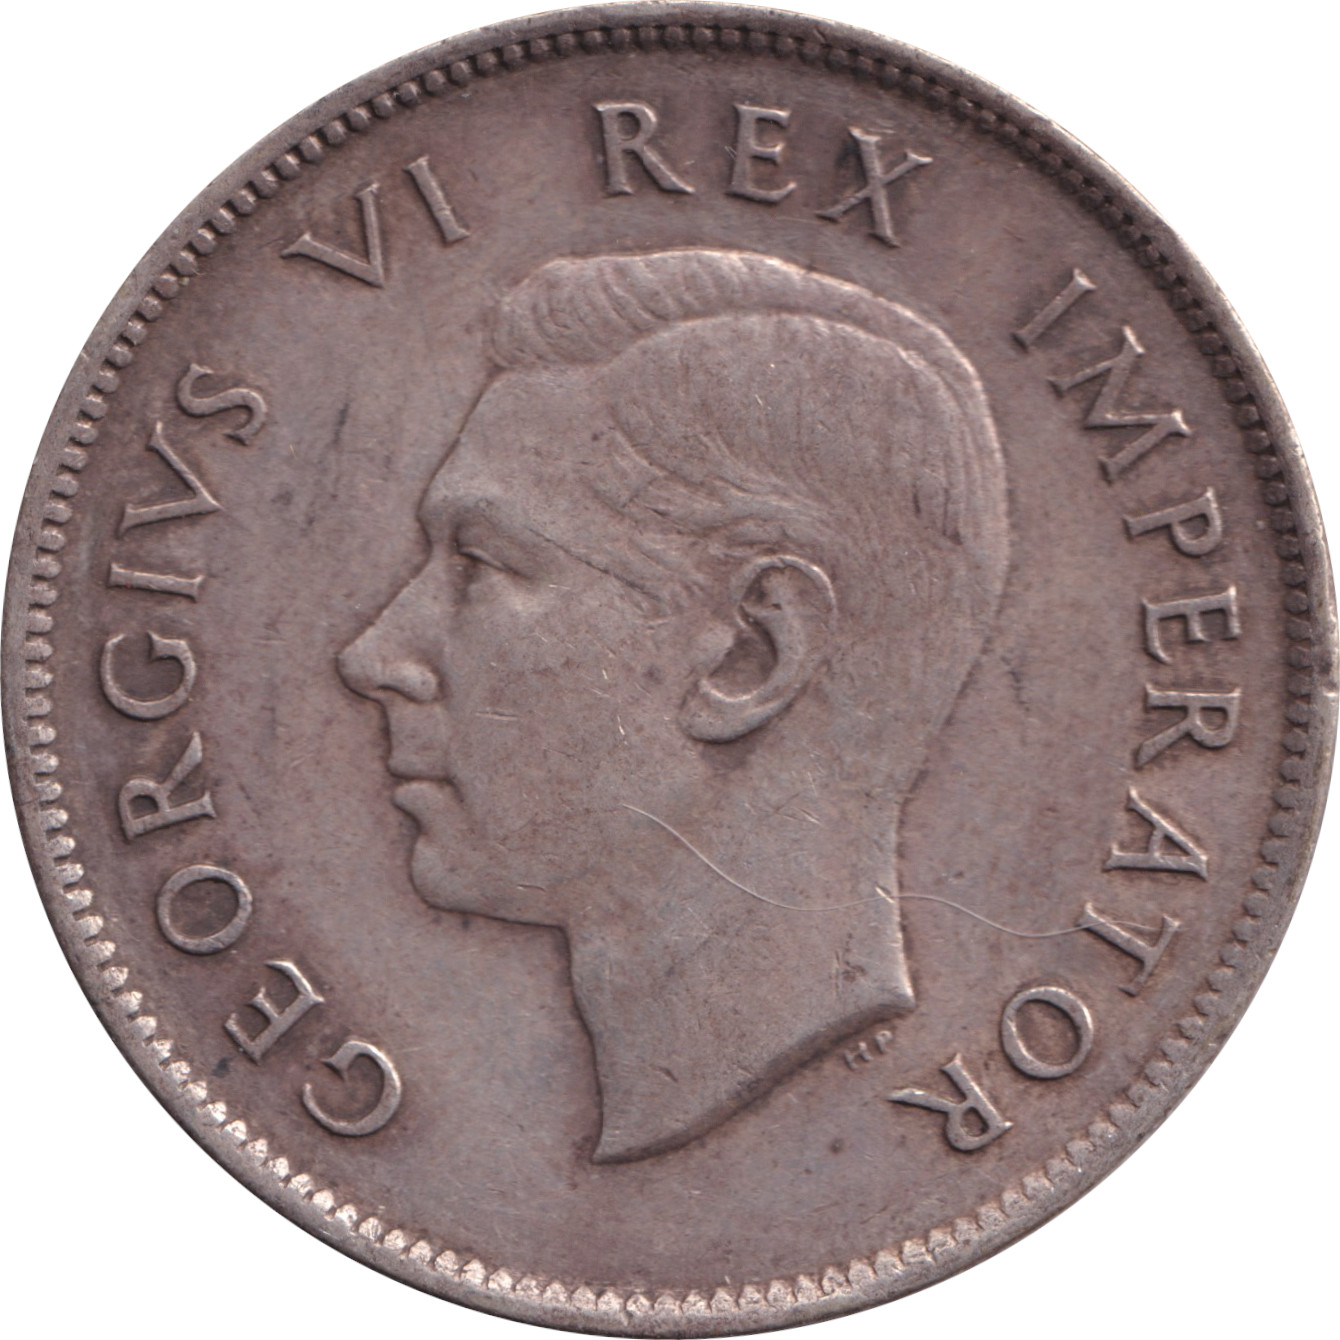 2 shillings - Georges VI